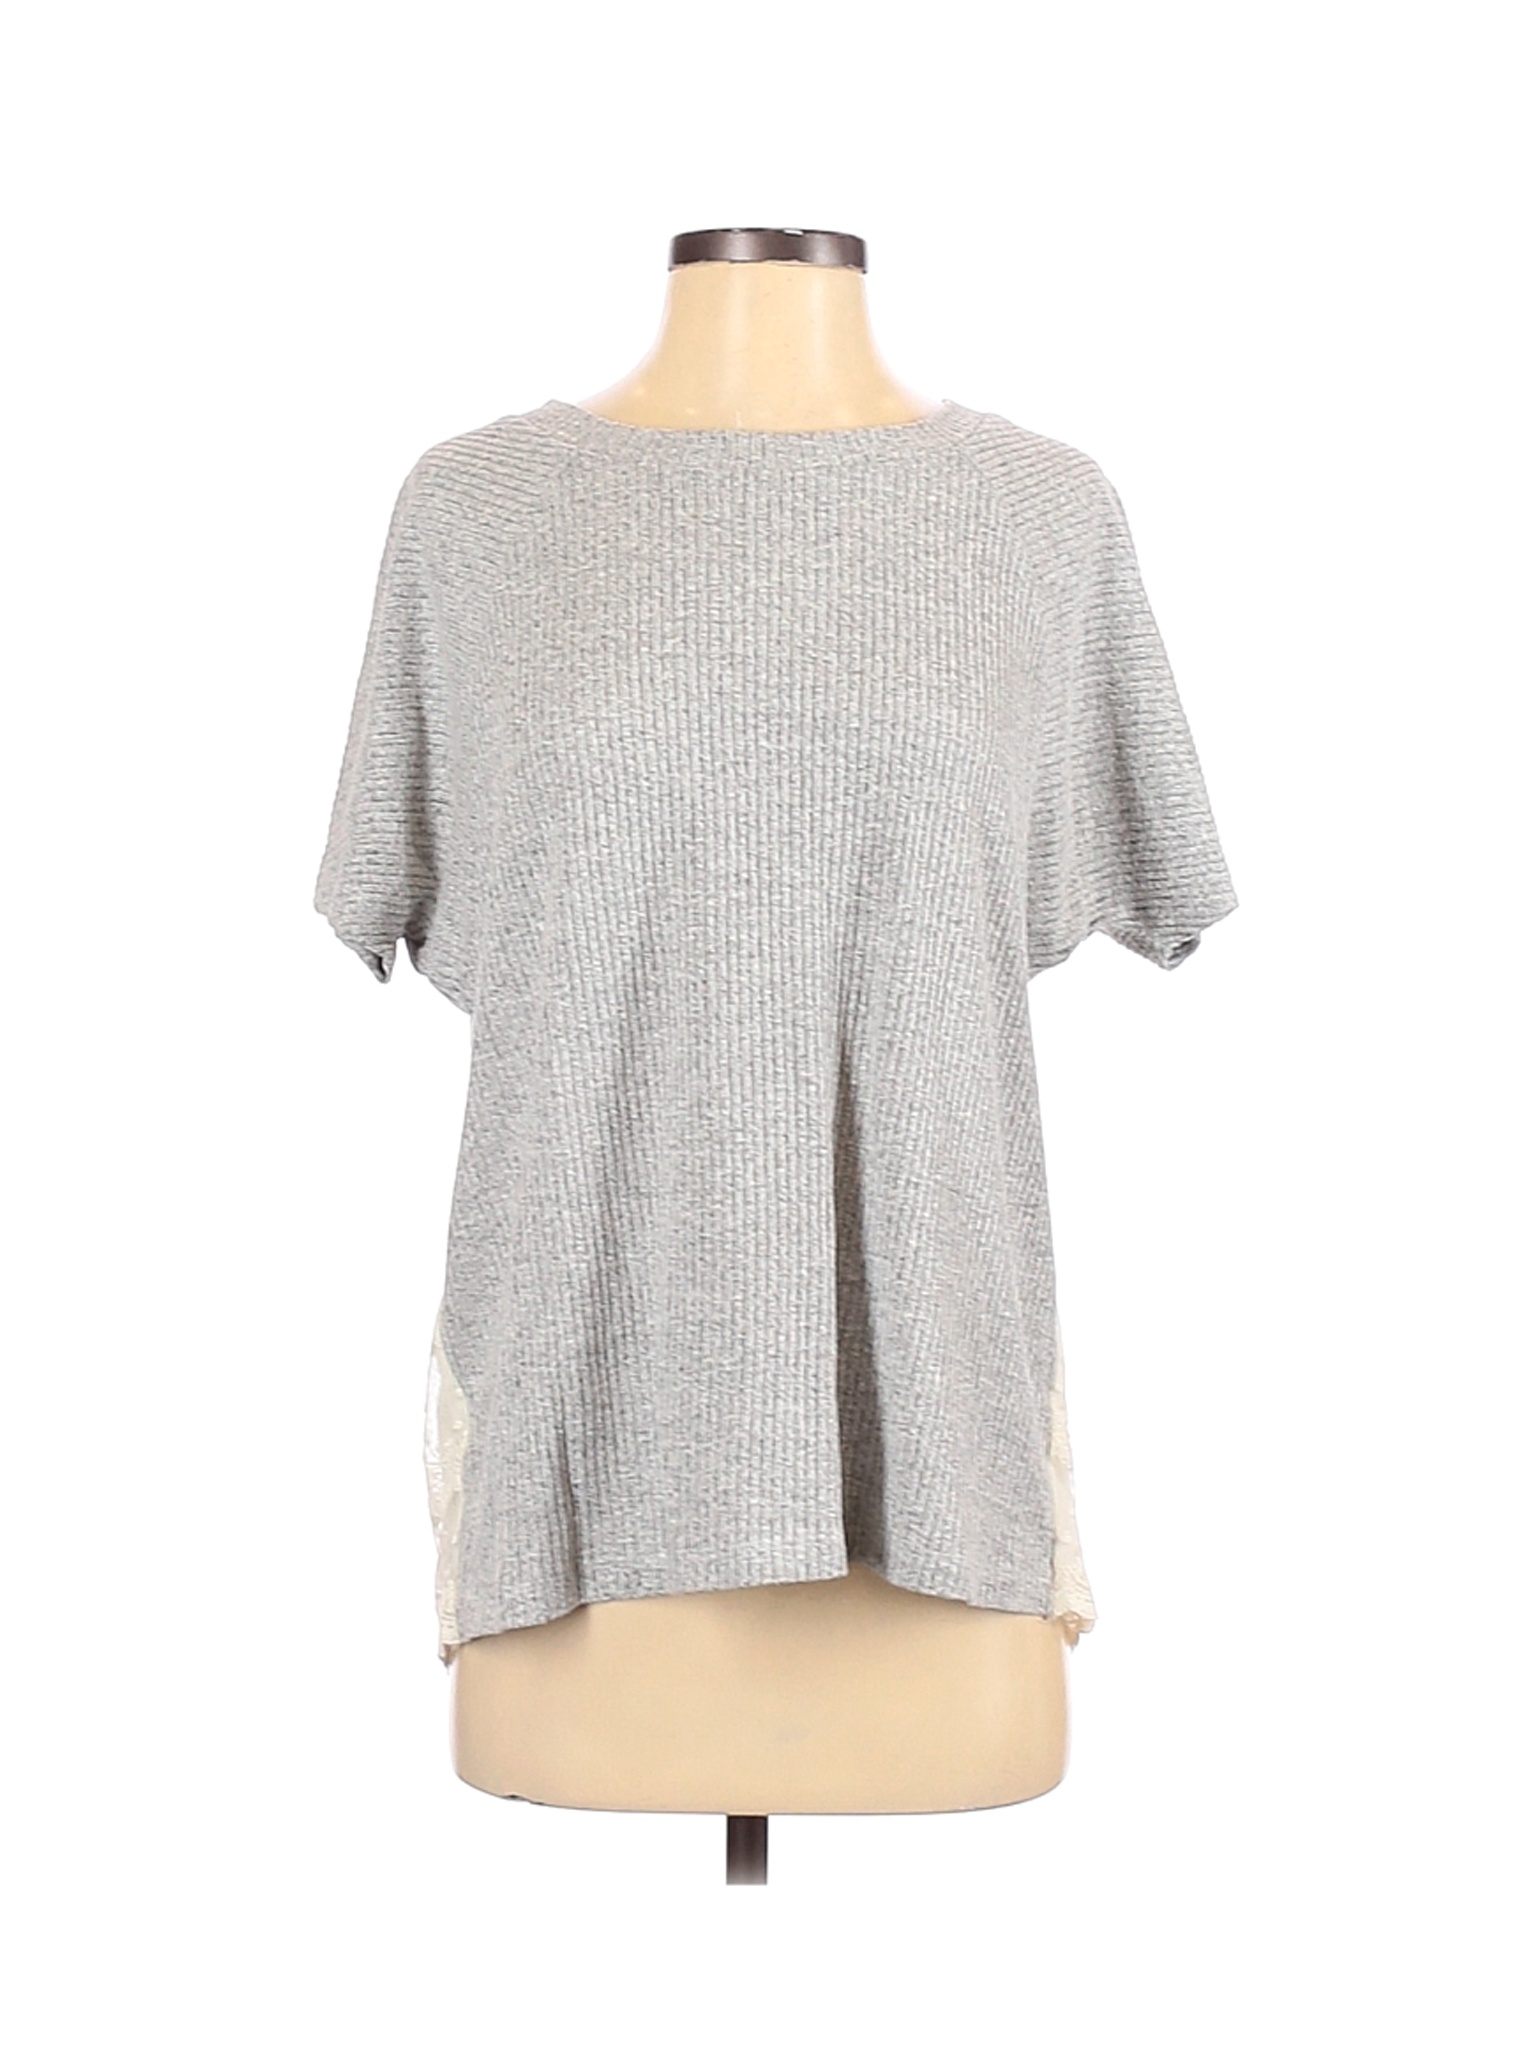 Others Follow Women Gray Short Sleeve Top S | eBay